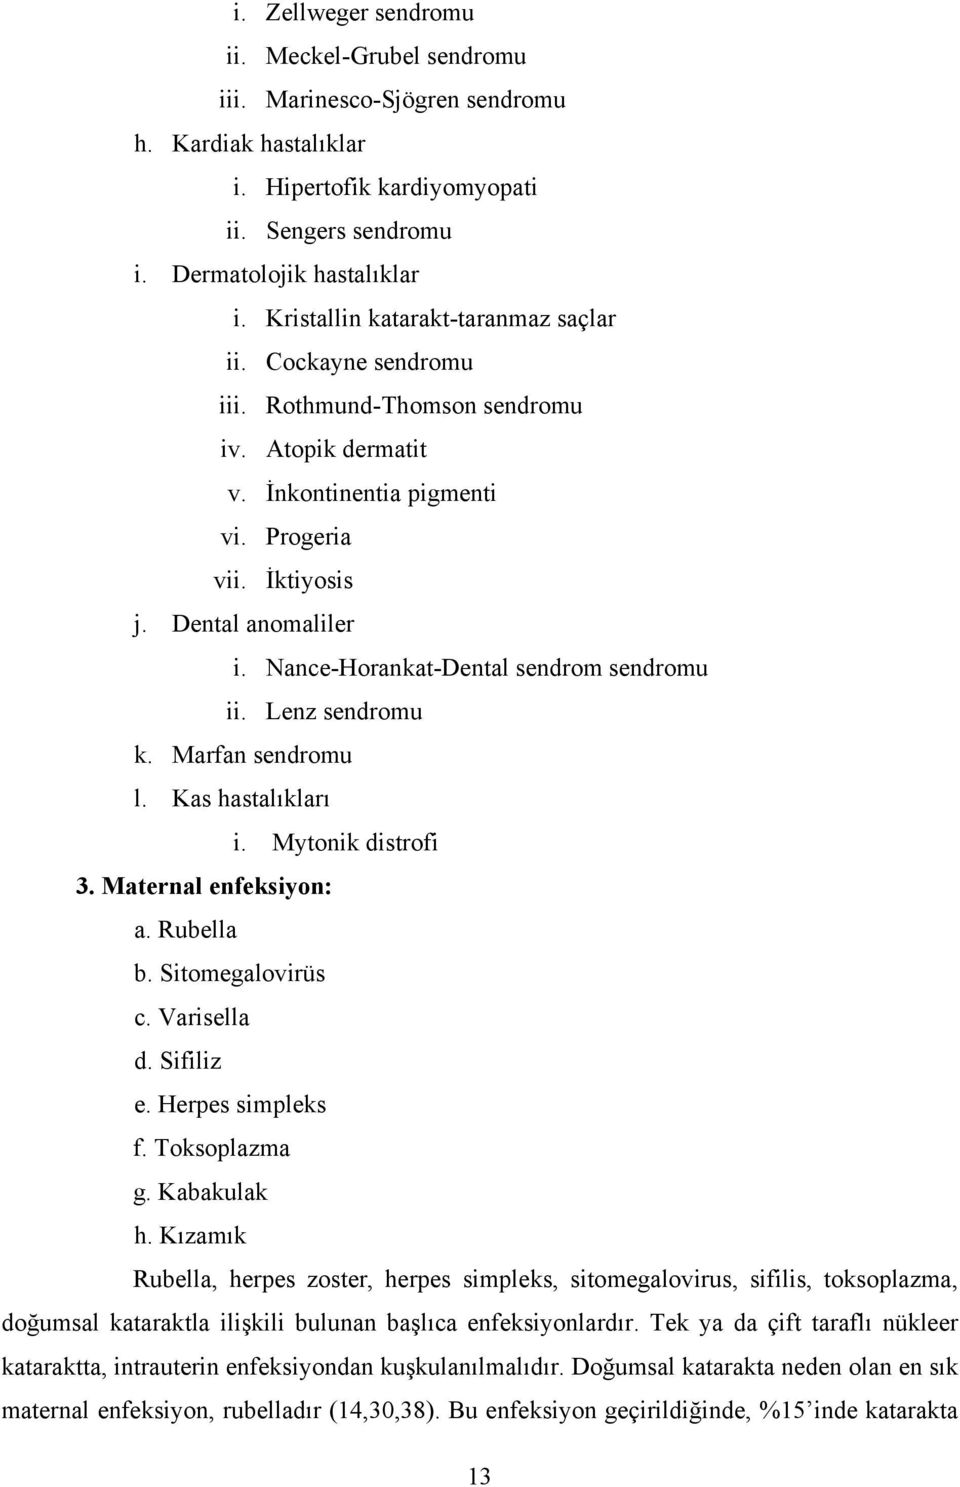 Nance-Horankat-Dental sendrom sendromu ii. Lenz sendromu k. Marfan sendromu l. Kas hastalıkları i. Mytonik distrofi 3. Maternal enfeksiyon: a. Rubella b. Sitomegalovirüs c. Varisella d. Sifiliz e.